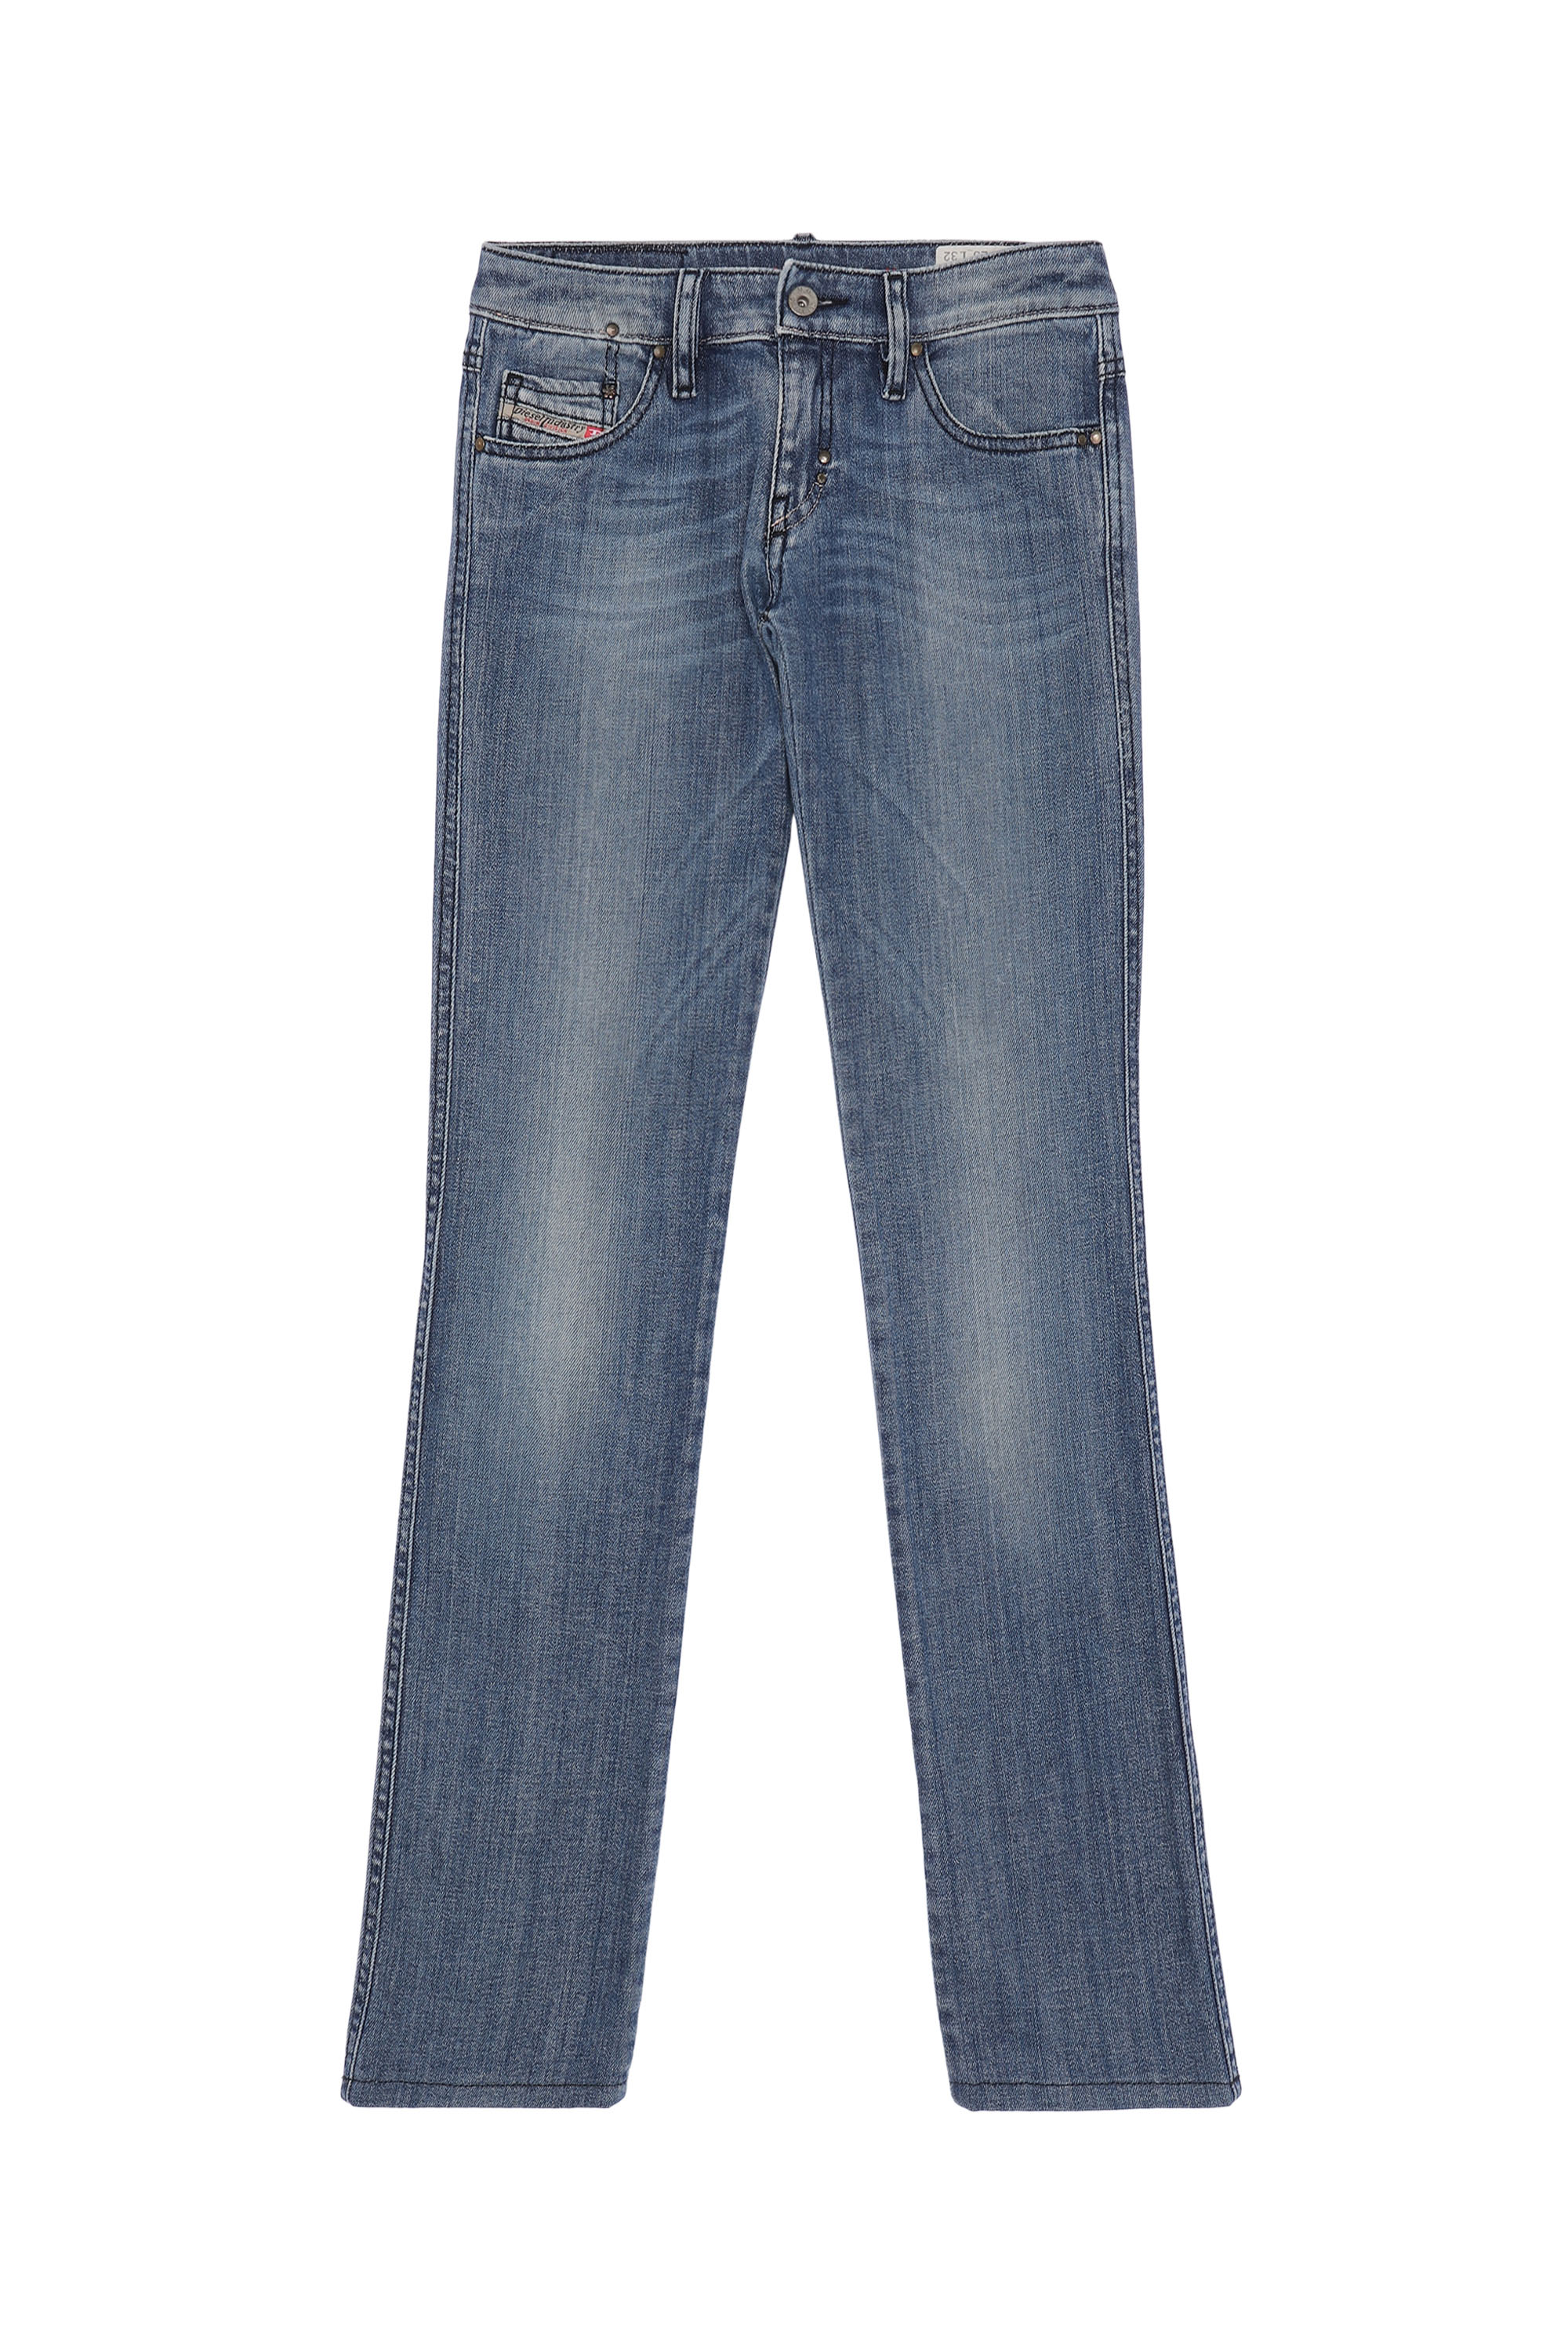 LHELA, Medium blue - Jeans